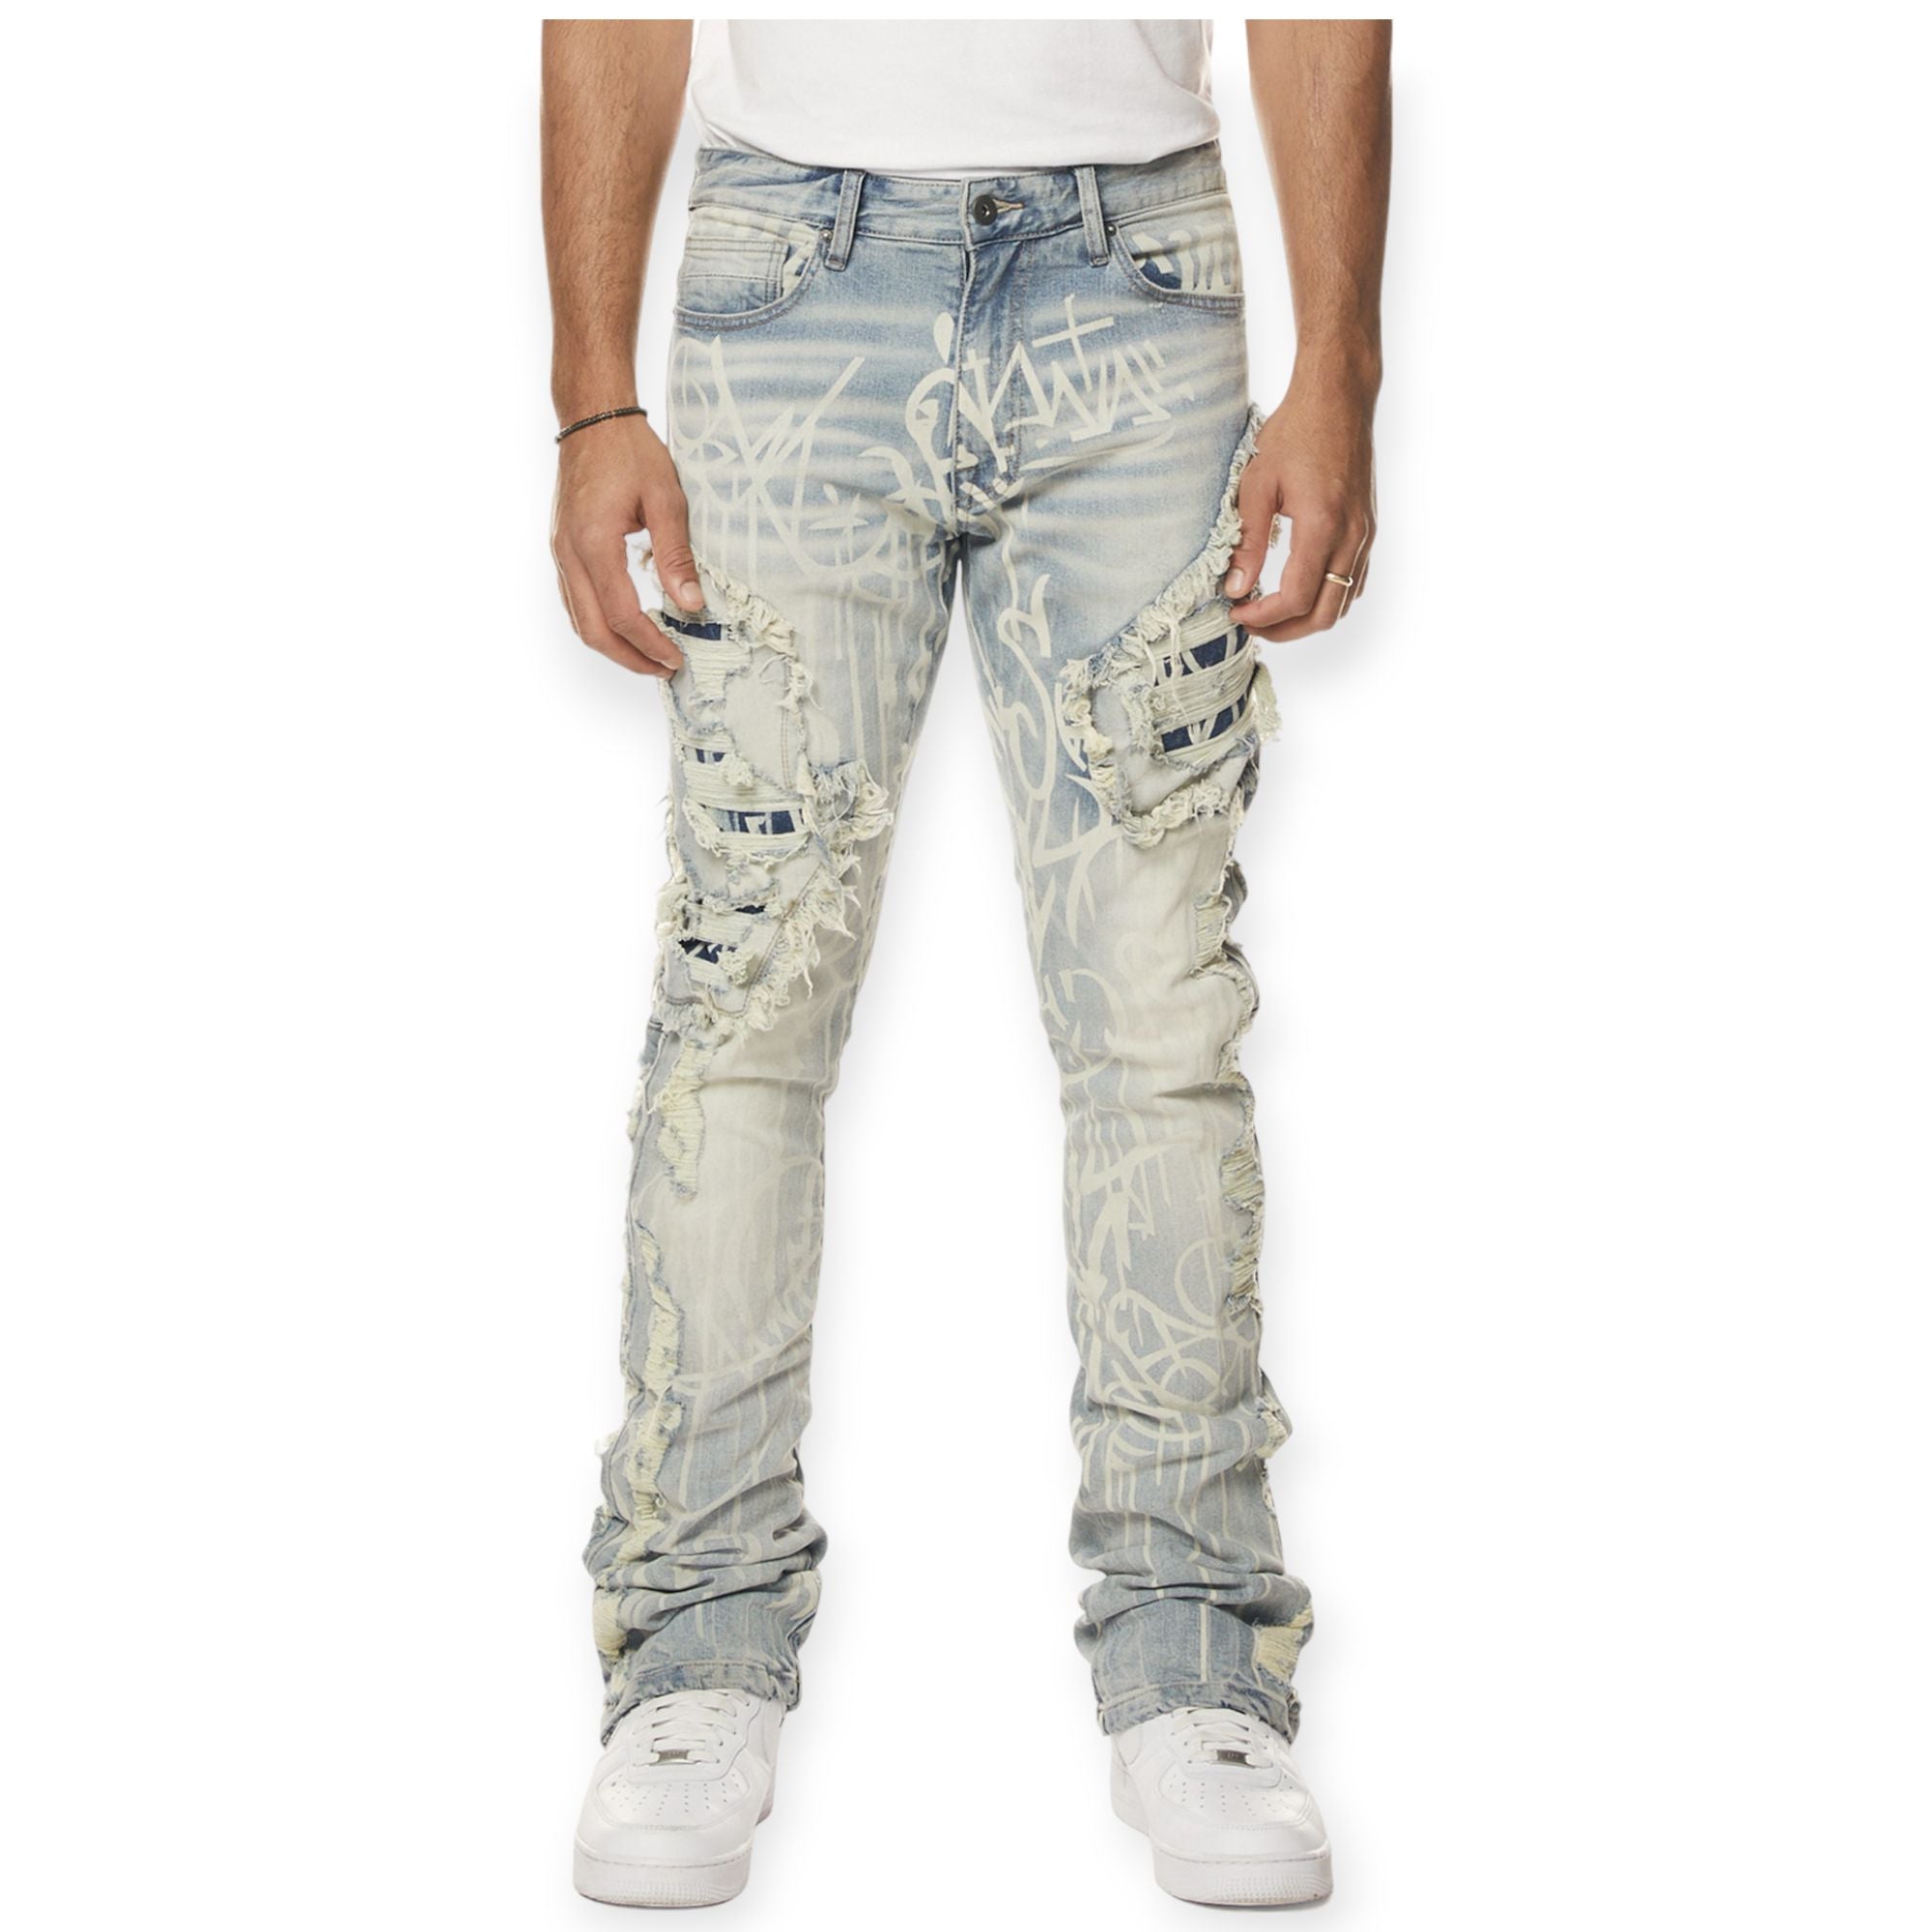 Smoke Rise Men Doodle Jeans (Nassau Blue)-Nassau Blue-32W x 36L-Nexus Clothing